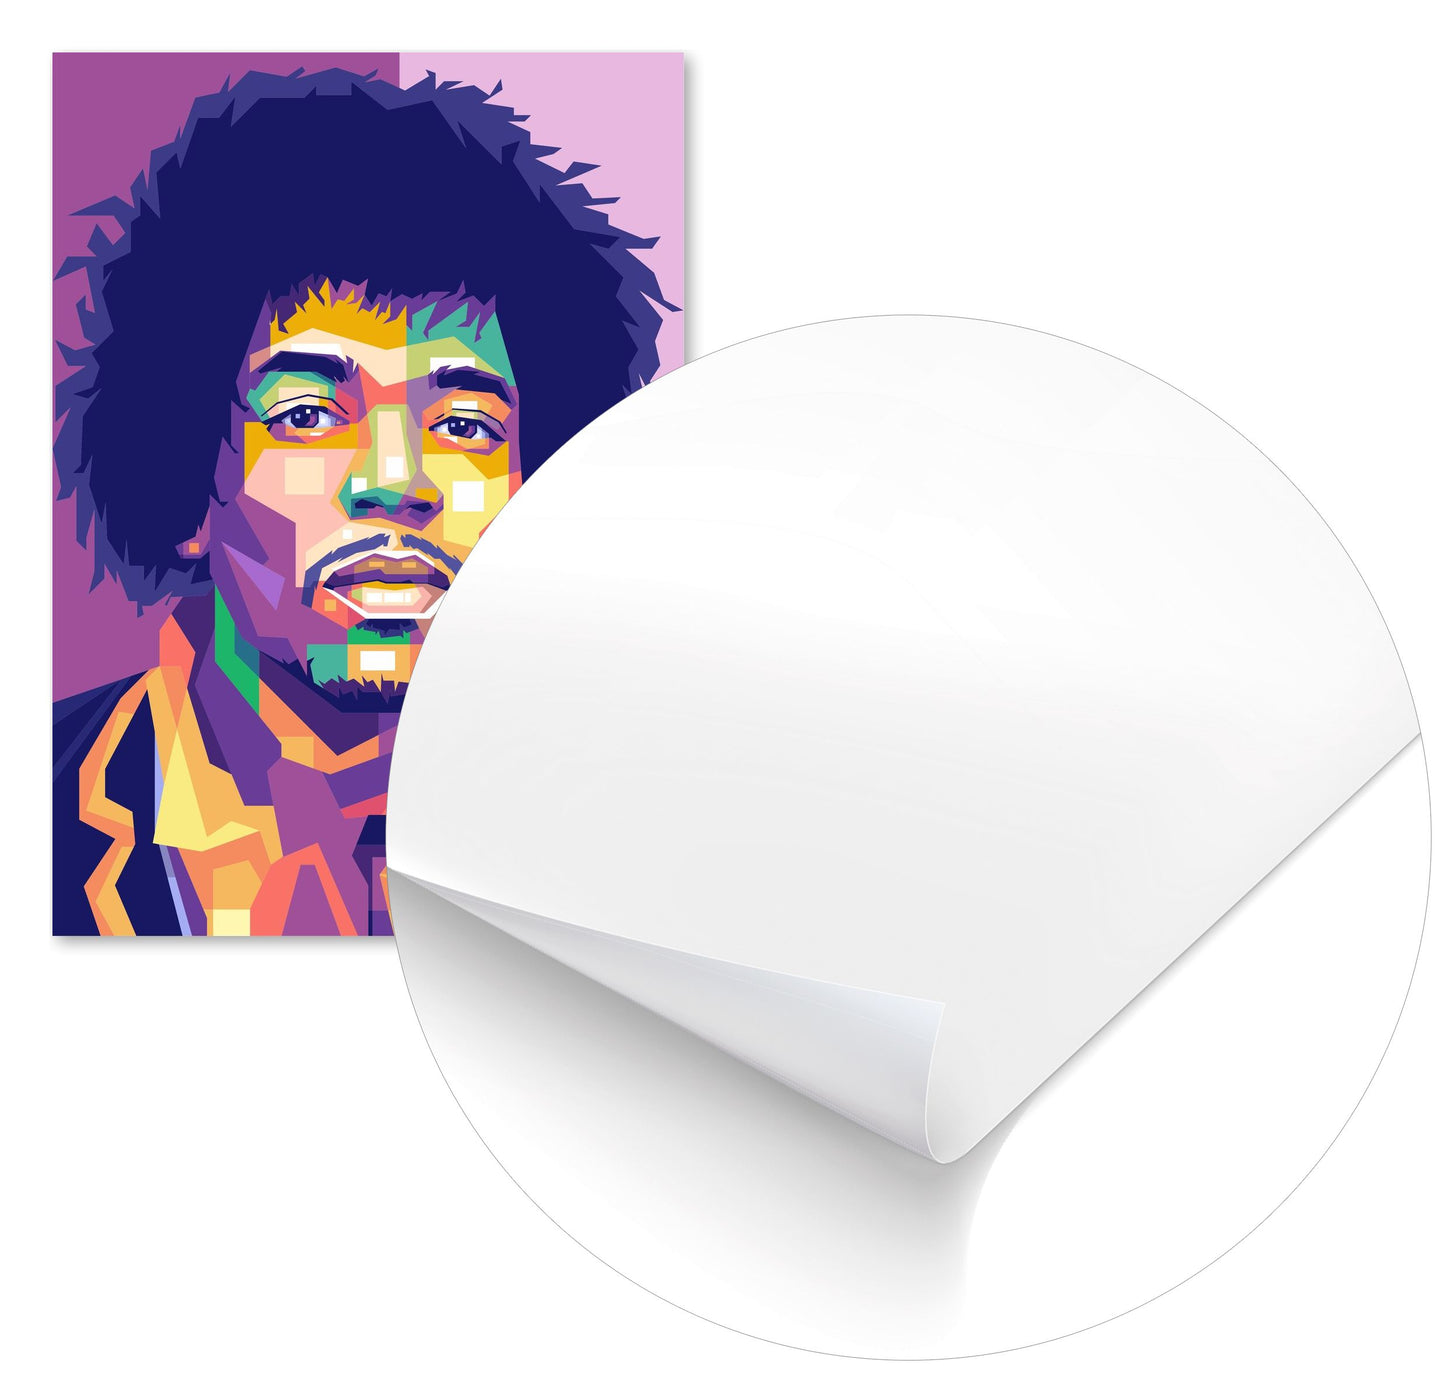 Jimi Hendrix Pop Art - @WpapArtist